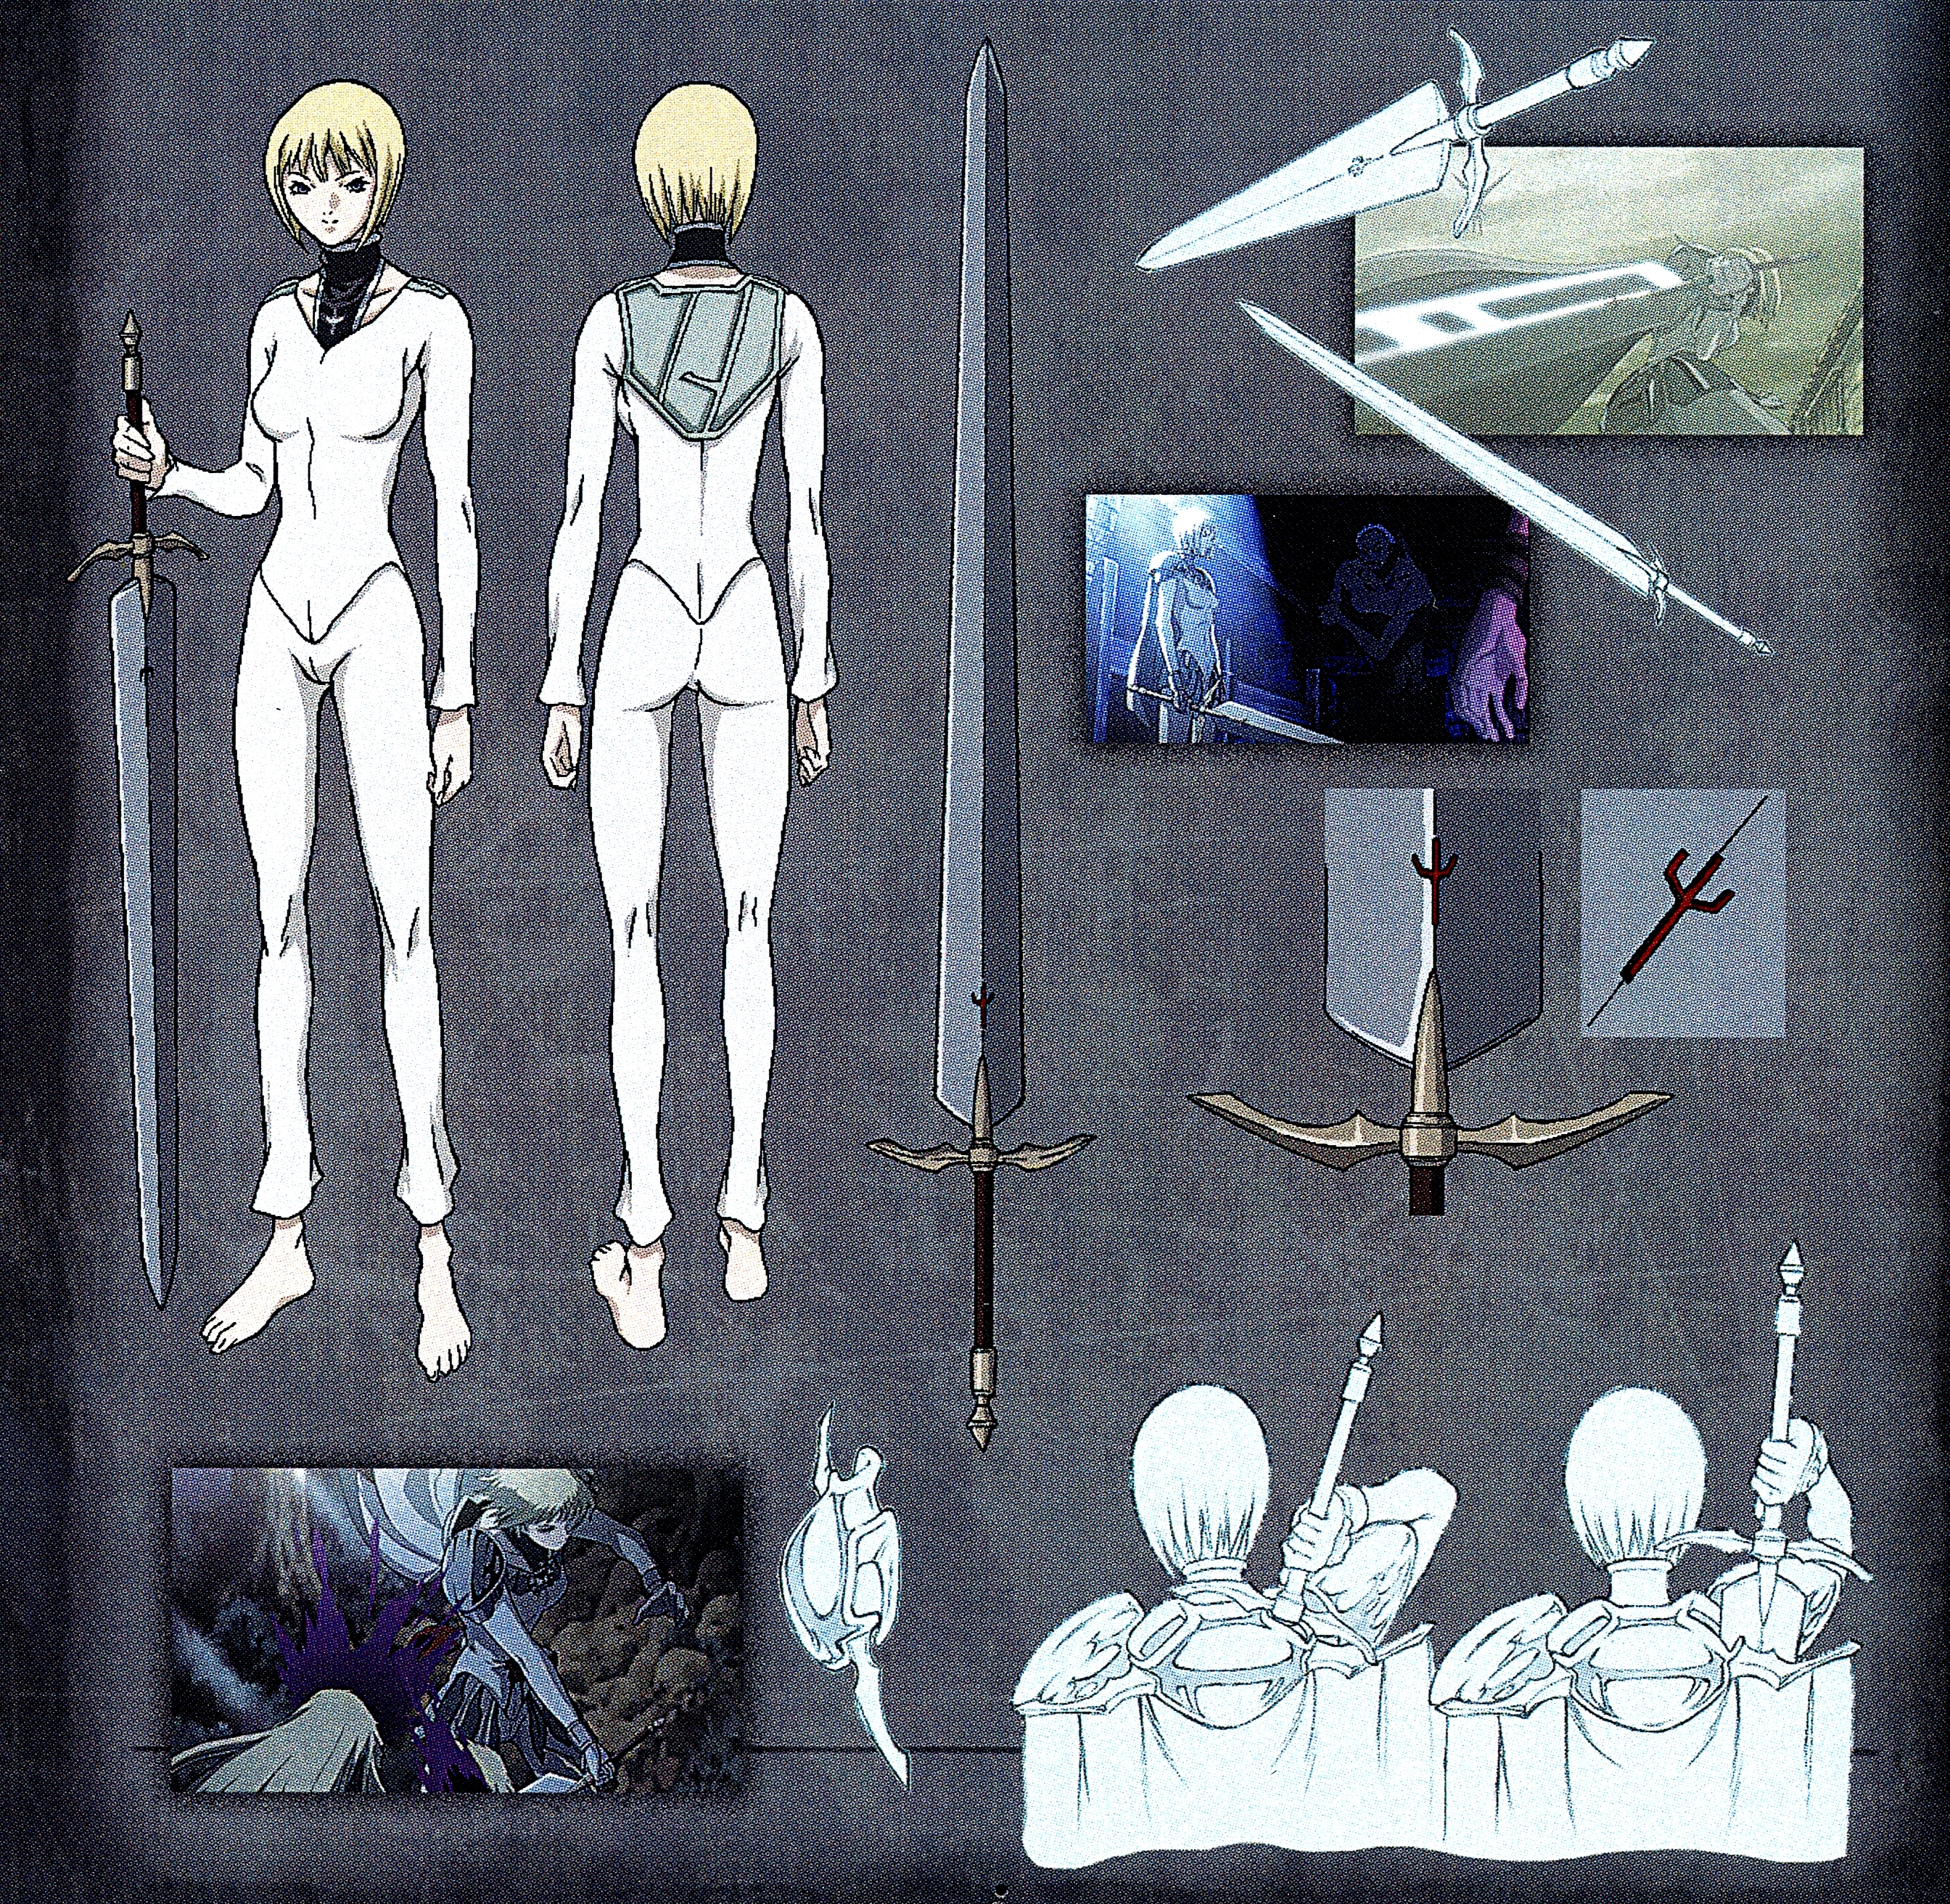 anime sword designs drawings